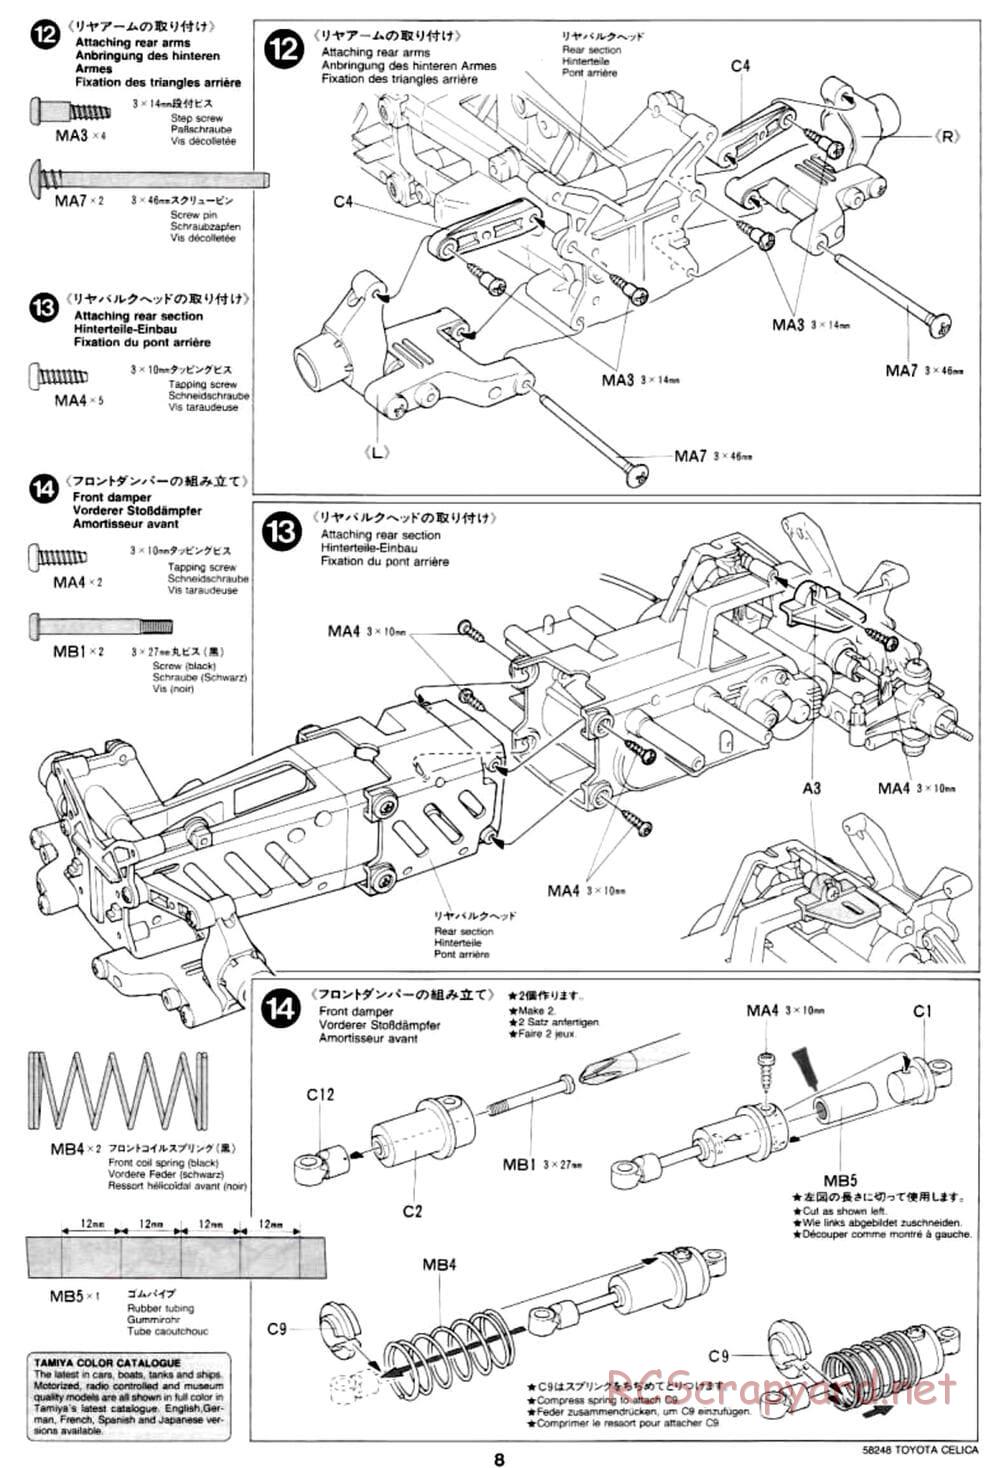 Tamiya - Toyota Celica - FF-02 Chassis - Manual - Page 8